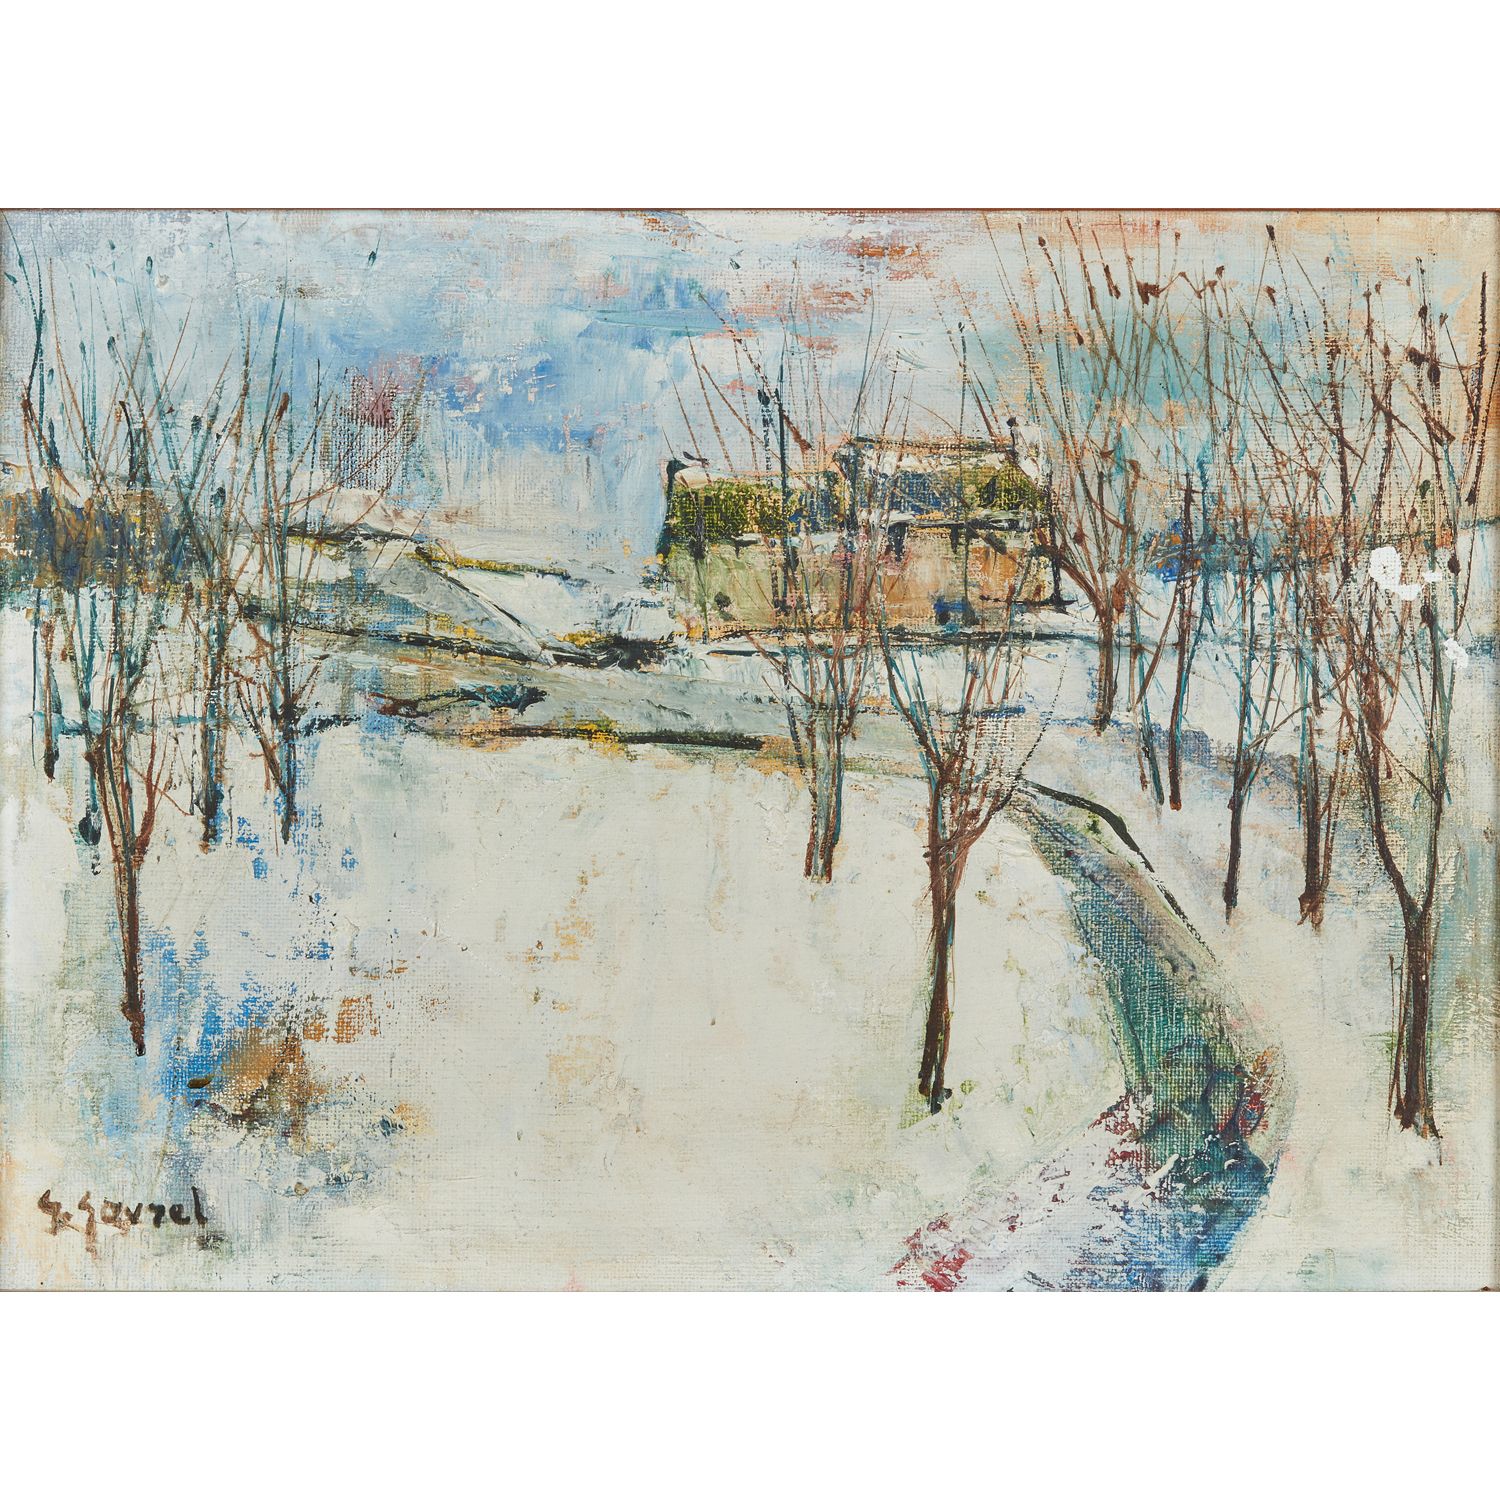 Null 热纳维耶夫-加夫雷尔 (1909 - 1999)
 雪地上的溪流景观
 右下角有签名的画布
 24 x 33 cm 
 (画布上的小事故)